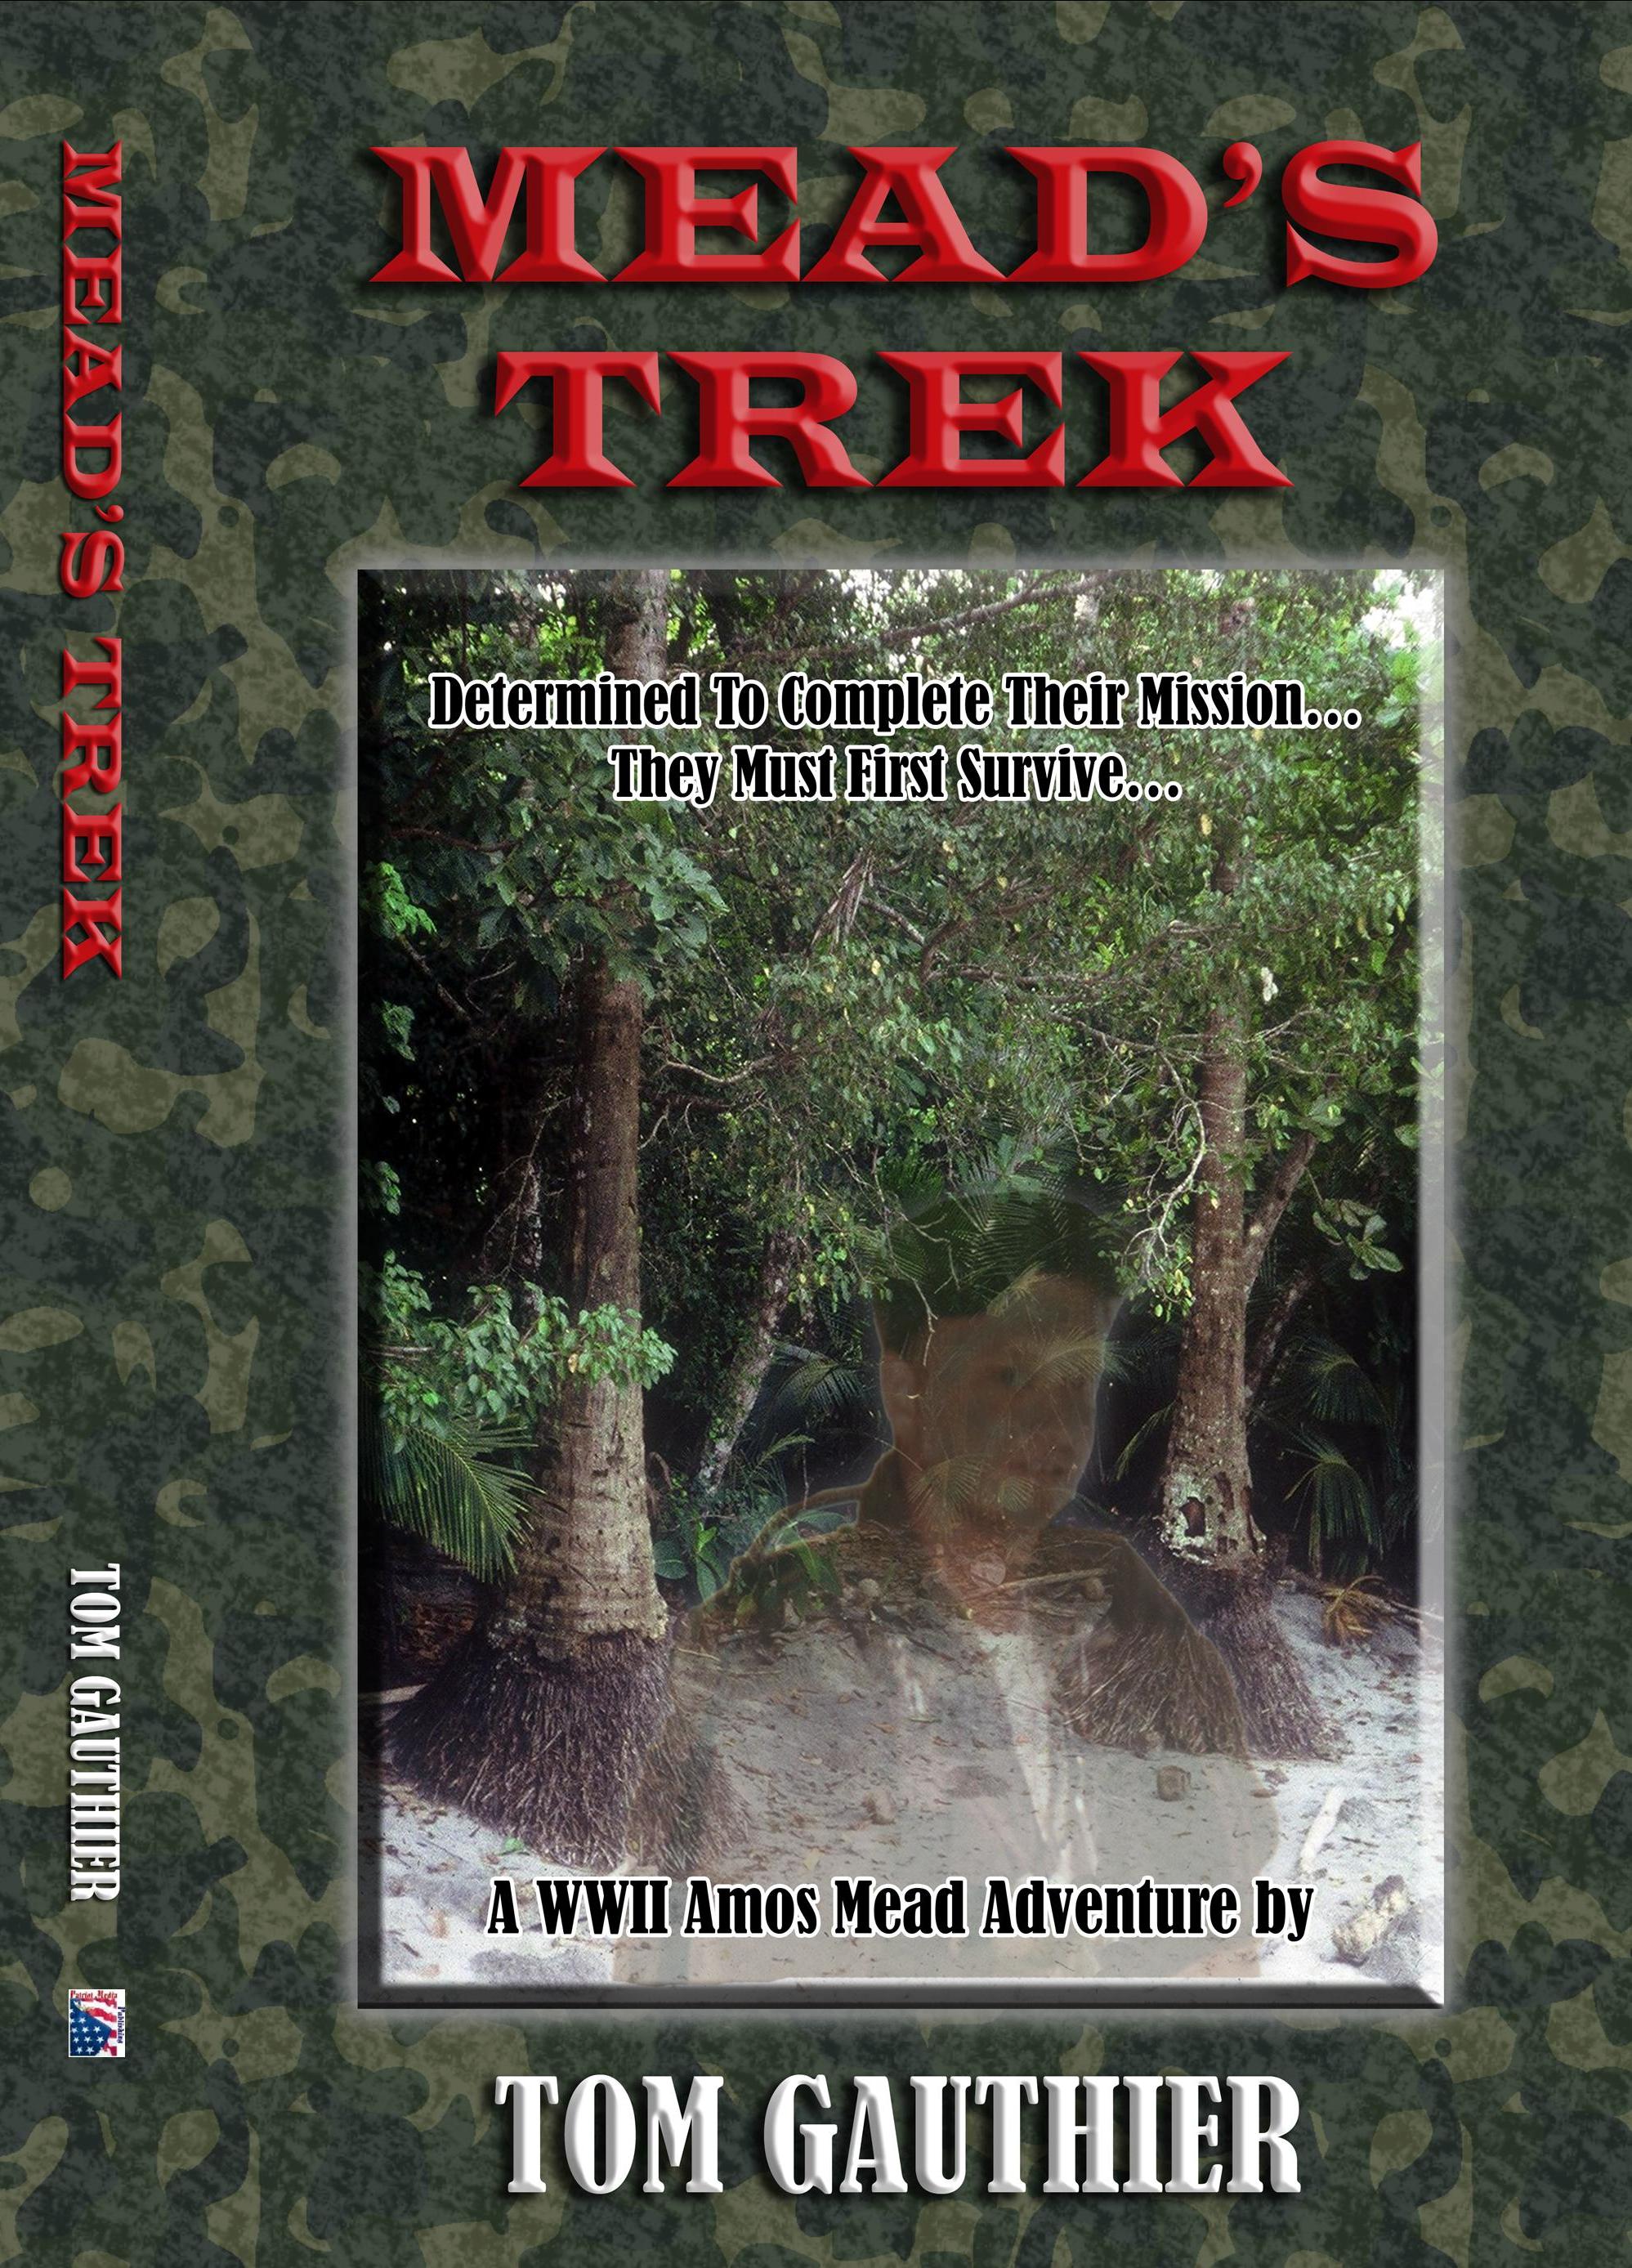 Mead's Trek by Tom Gauthier